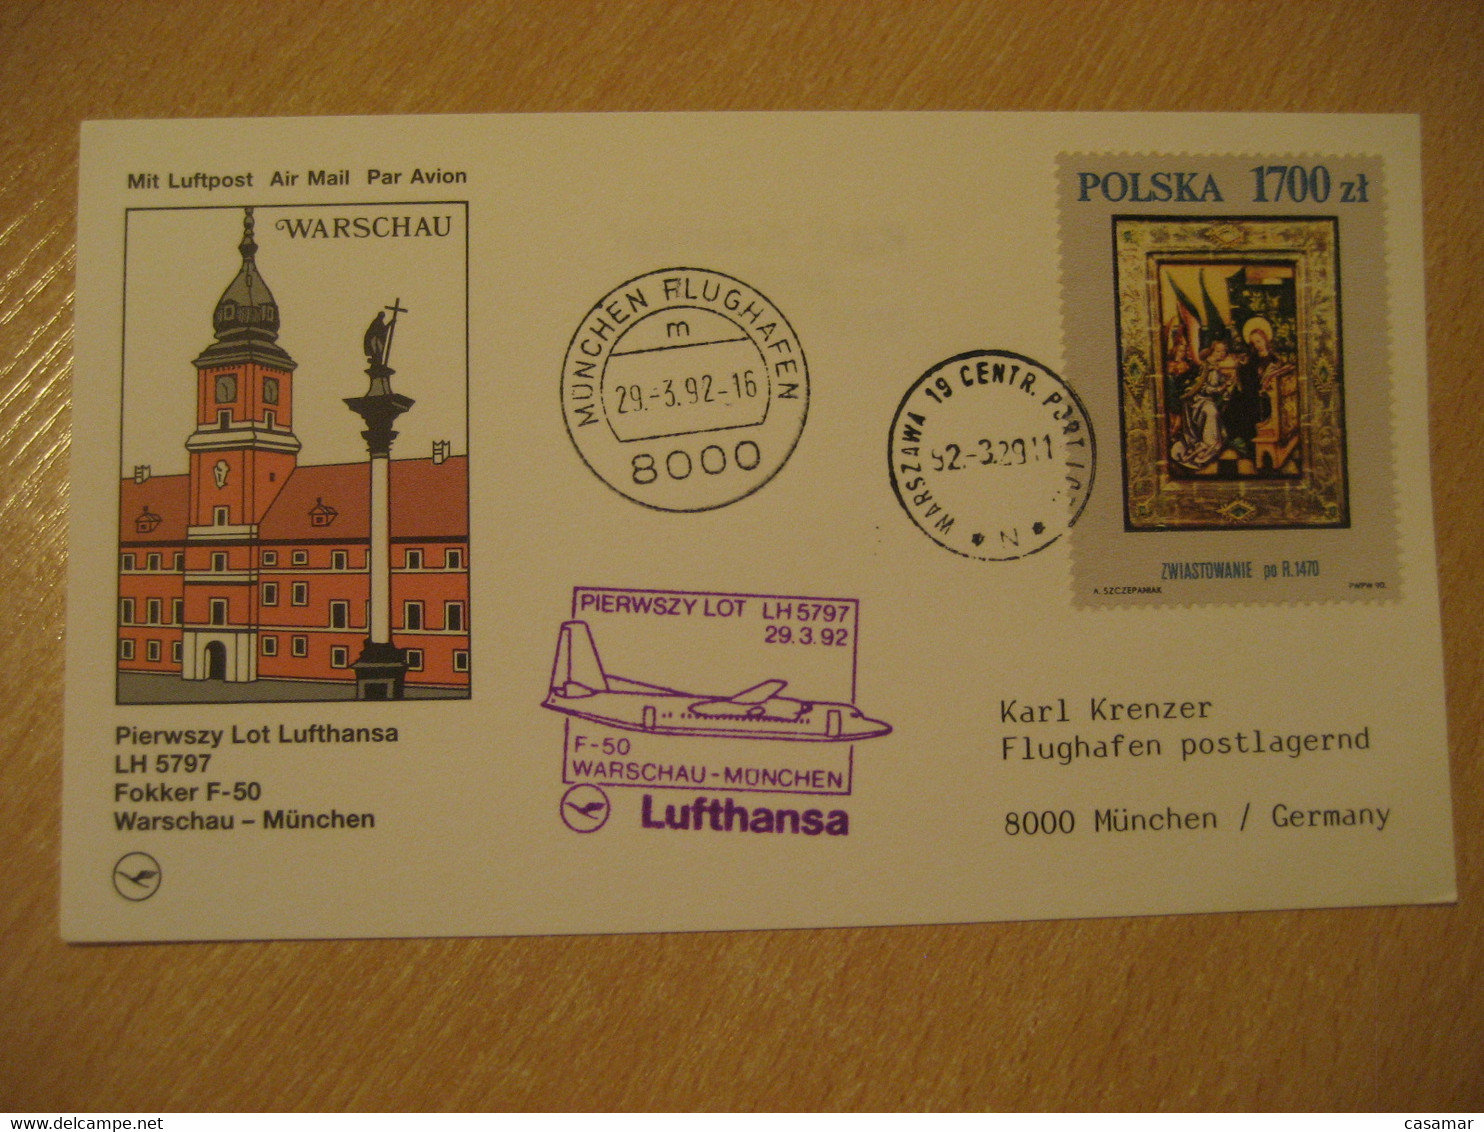 WARSZAWA Warsaw Munich 1992 Lufthansa Airlines Airline Fokker F-50 First Flight Violet Cancel Card POLAND GERMANY - Aviones